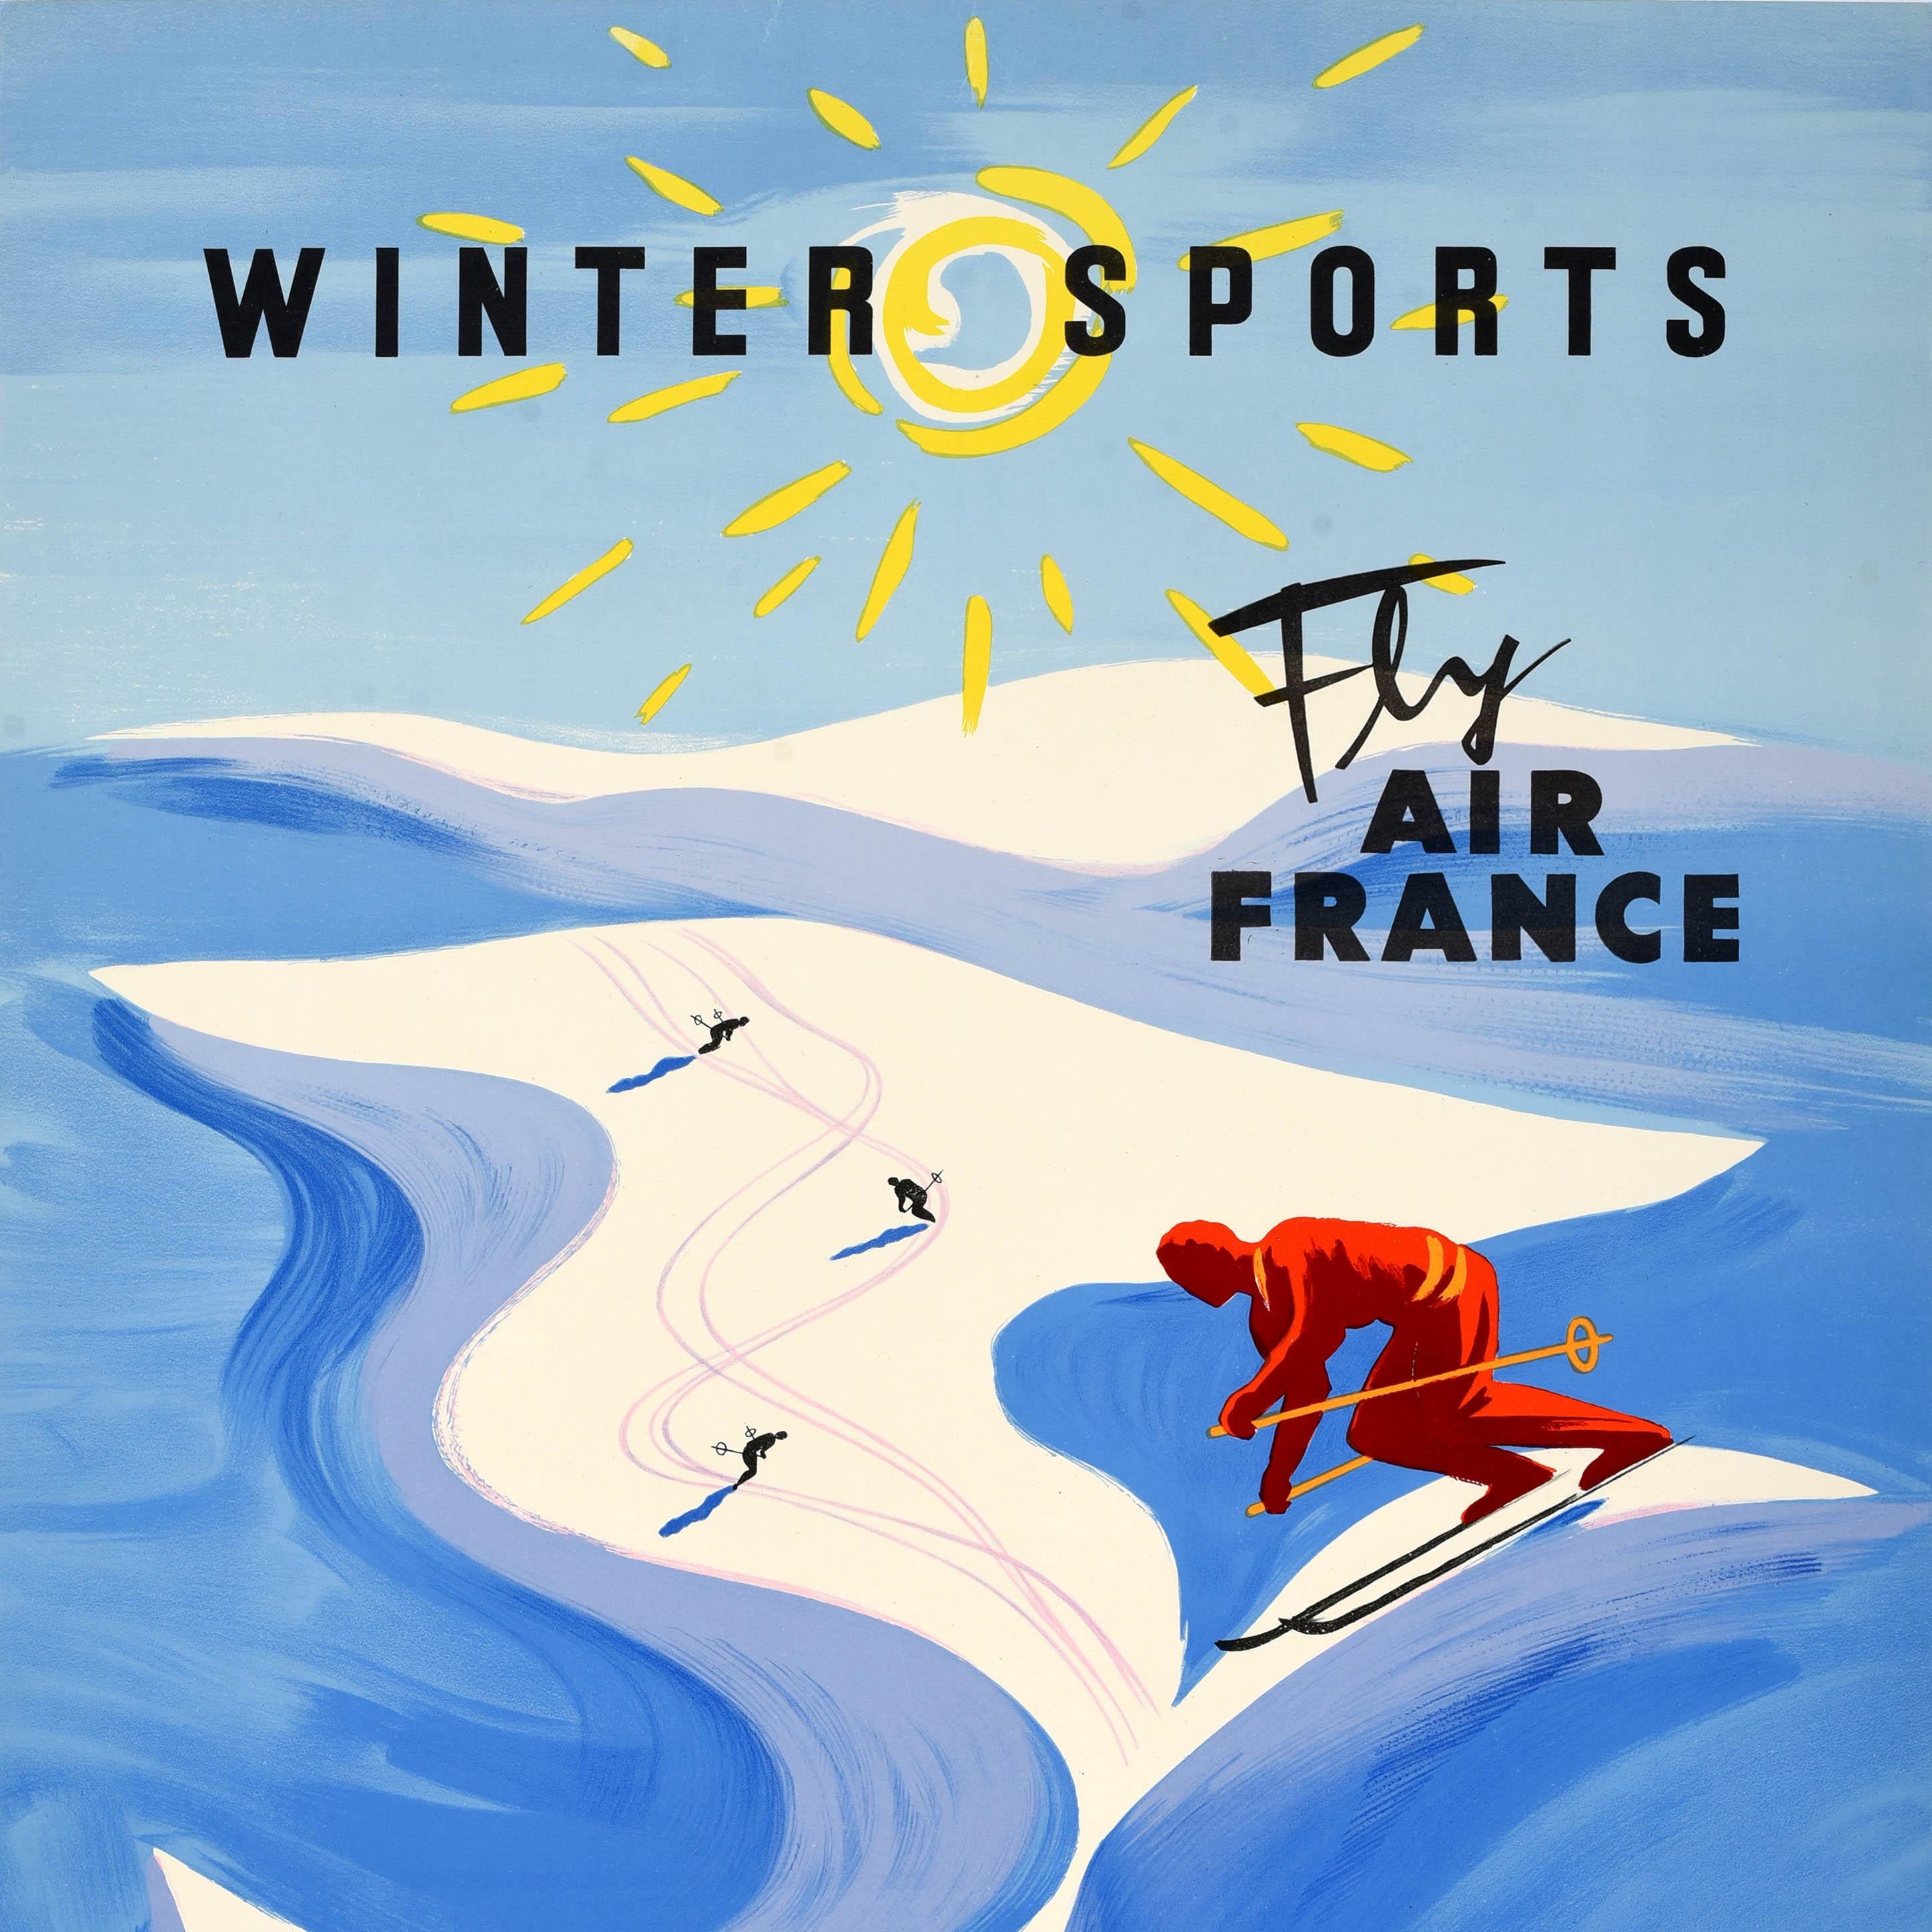 Original-Vintage-Ski-Reiseplakat, Wintersport, Fly Air France Villemot, Design (Blau), Print, von Bernard Villemot